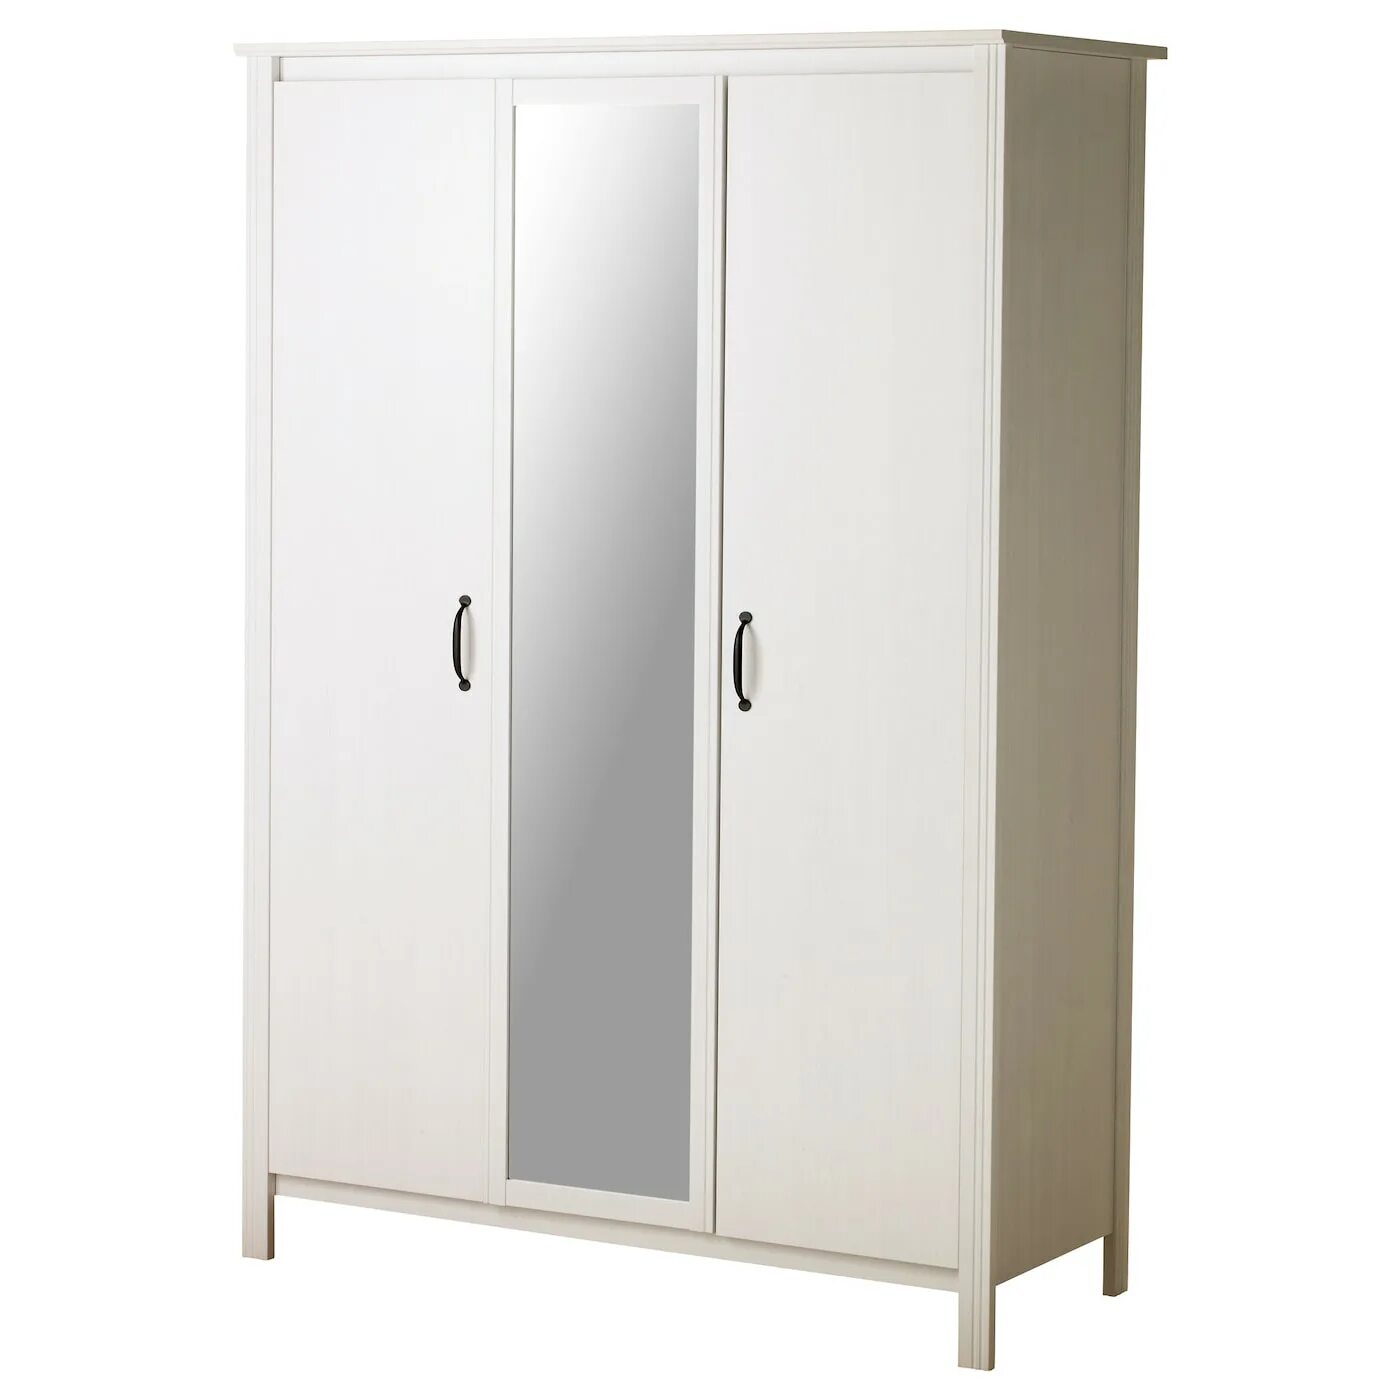 Купить недорого икеа. Ikea Brusali шкаф. БРУСАЛИ икеа платяной шкаф. Шкаф платяной икеа белый. Шкаф икеа белый трехдверный.